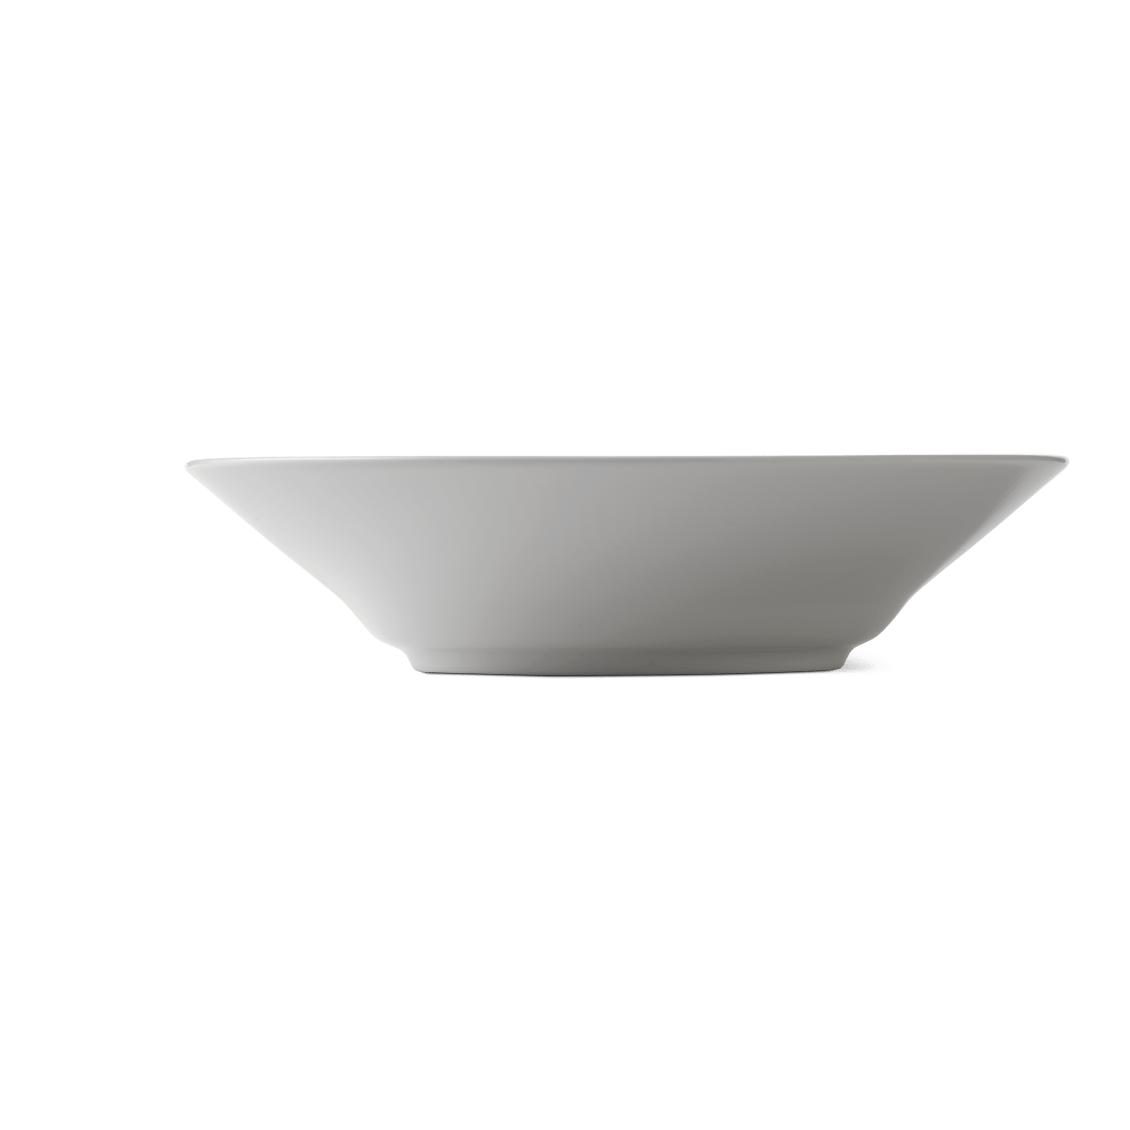 Royal Copenhagen White rillet dyp plate, 24 cm